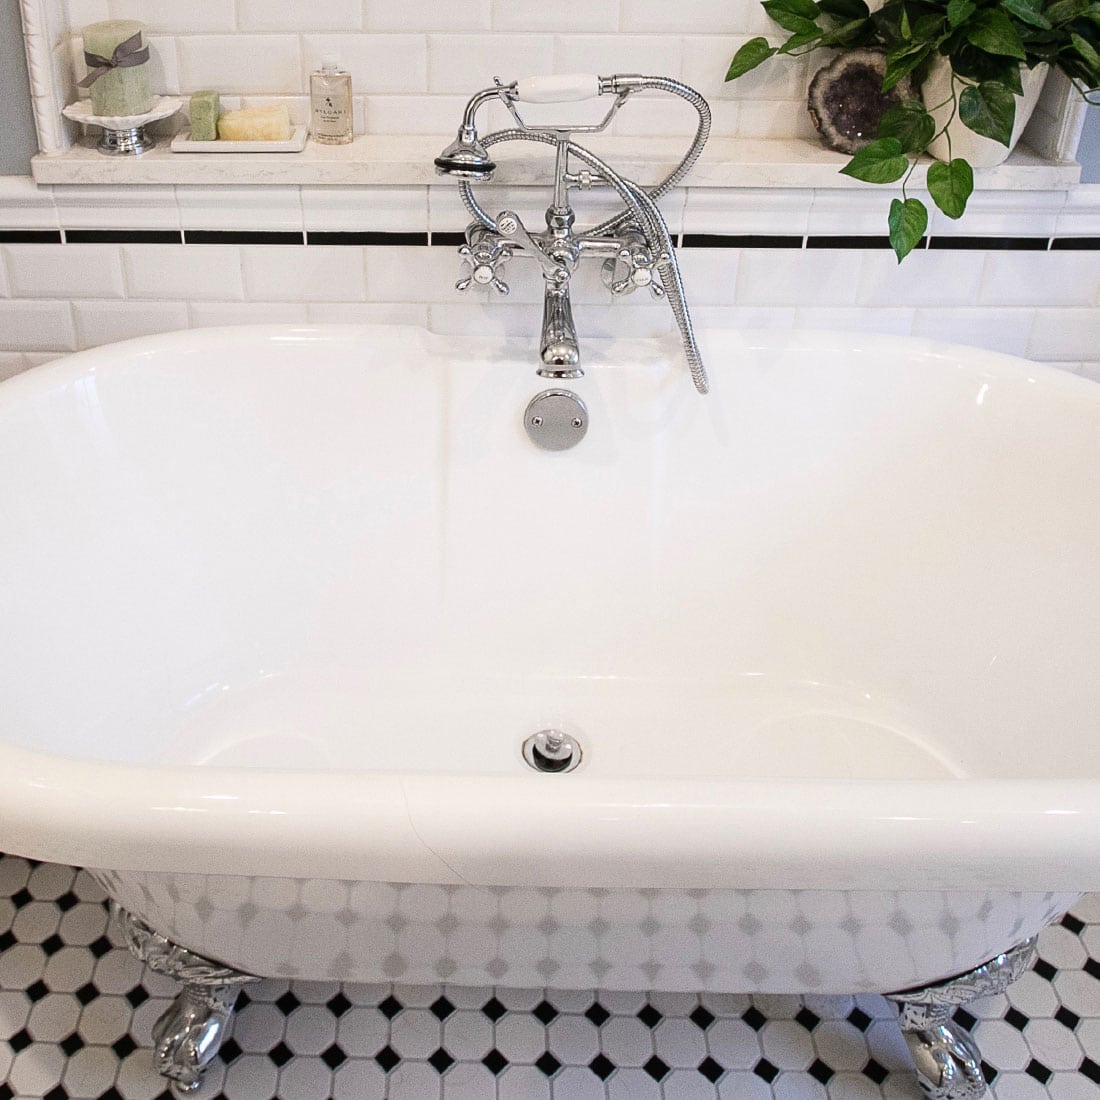 White clawfoot tub in renovated bath